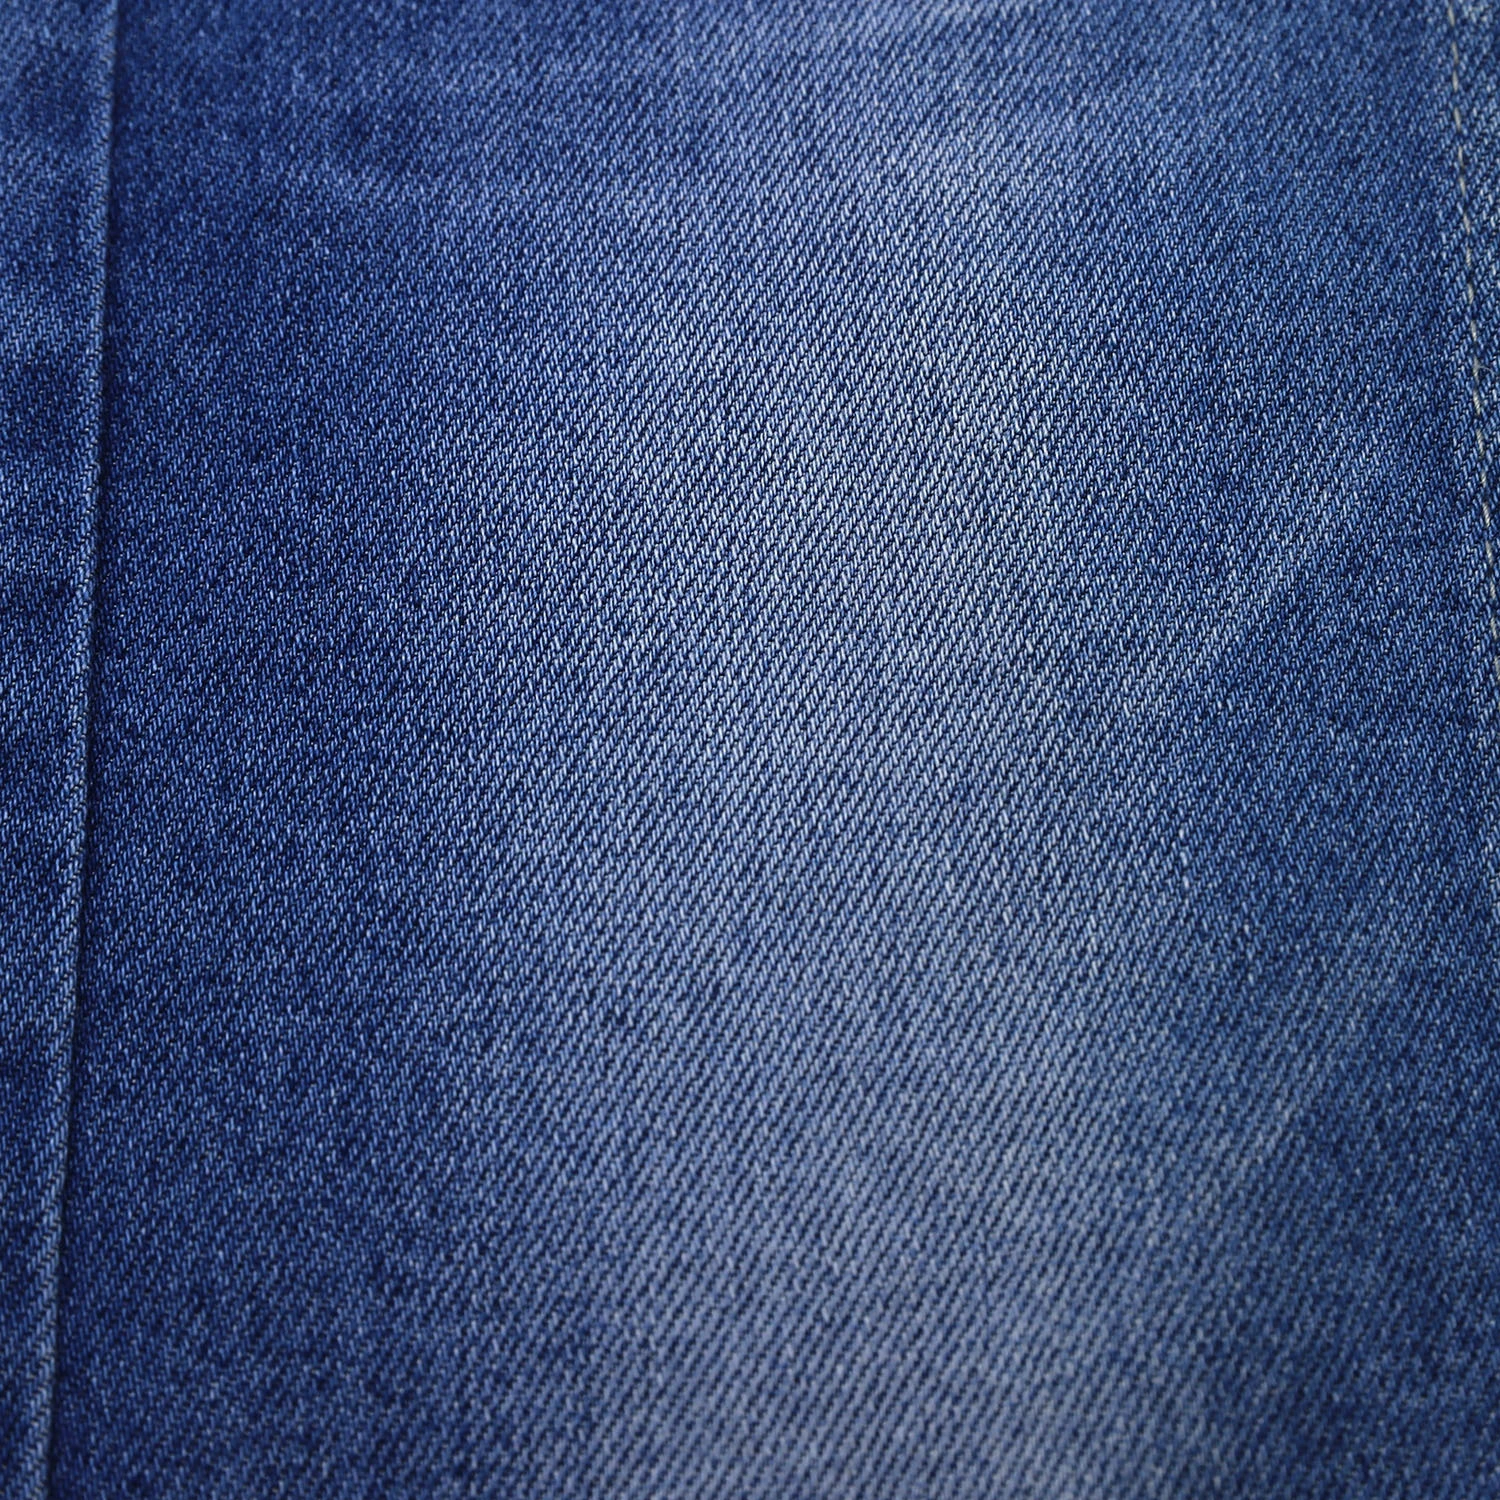 T230A-2 71%Cotton  25%Poly   3.5%Viscose  0.5%Spandex Kids denim fabric with Stretch 8